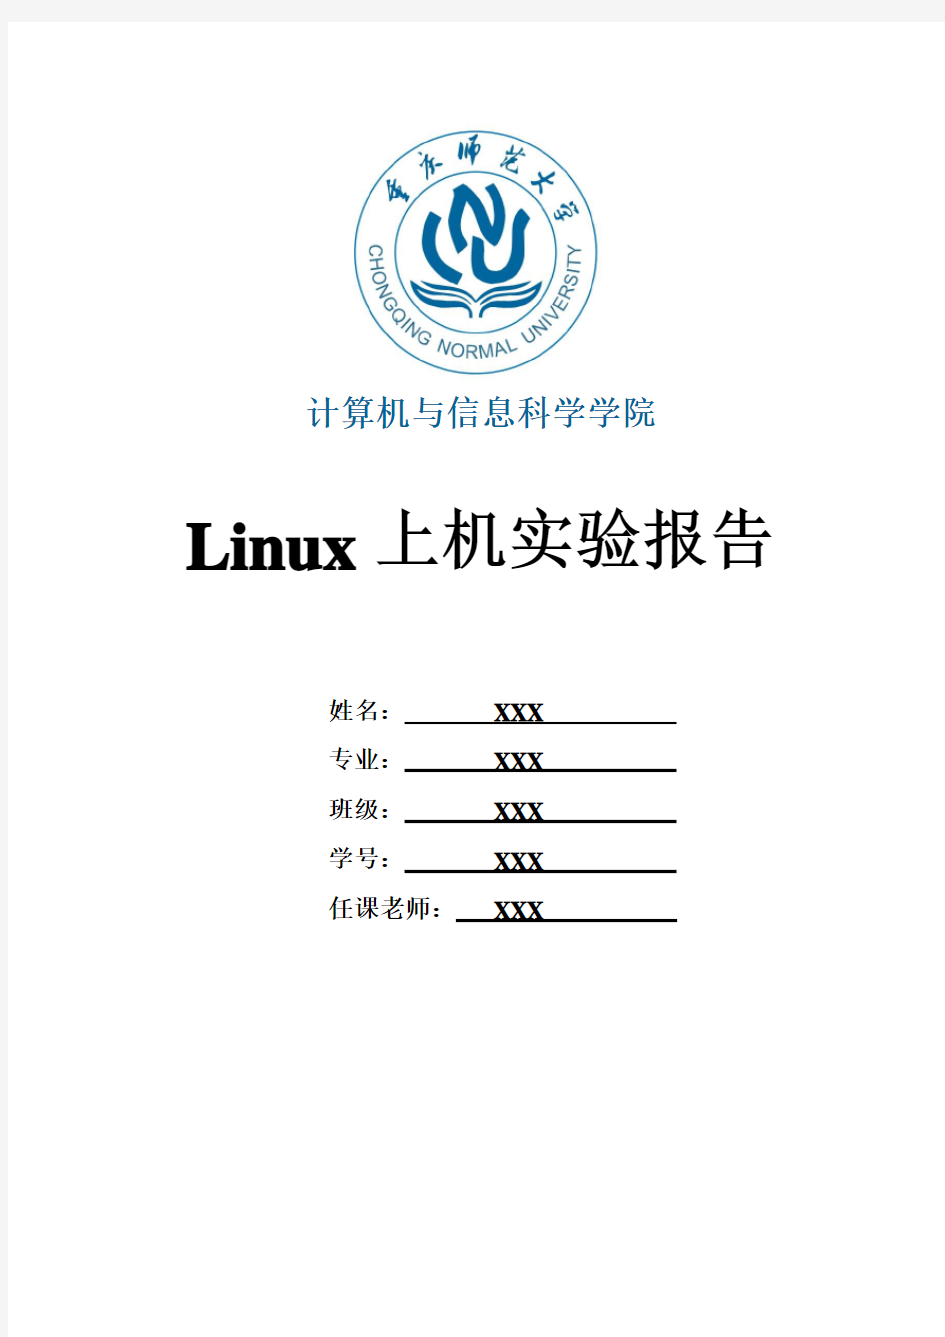 Linux上机实验报告【总】